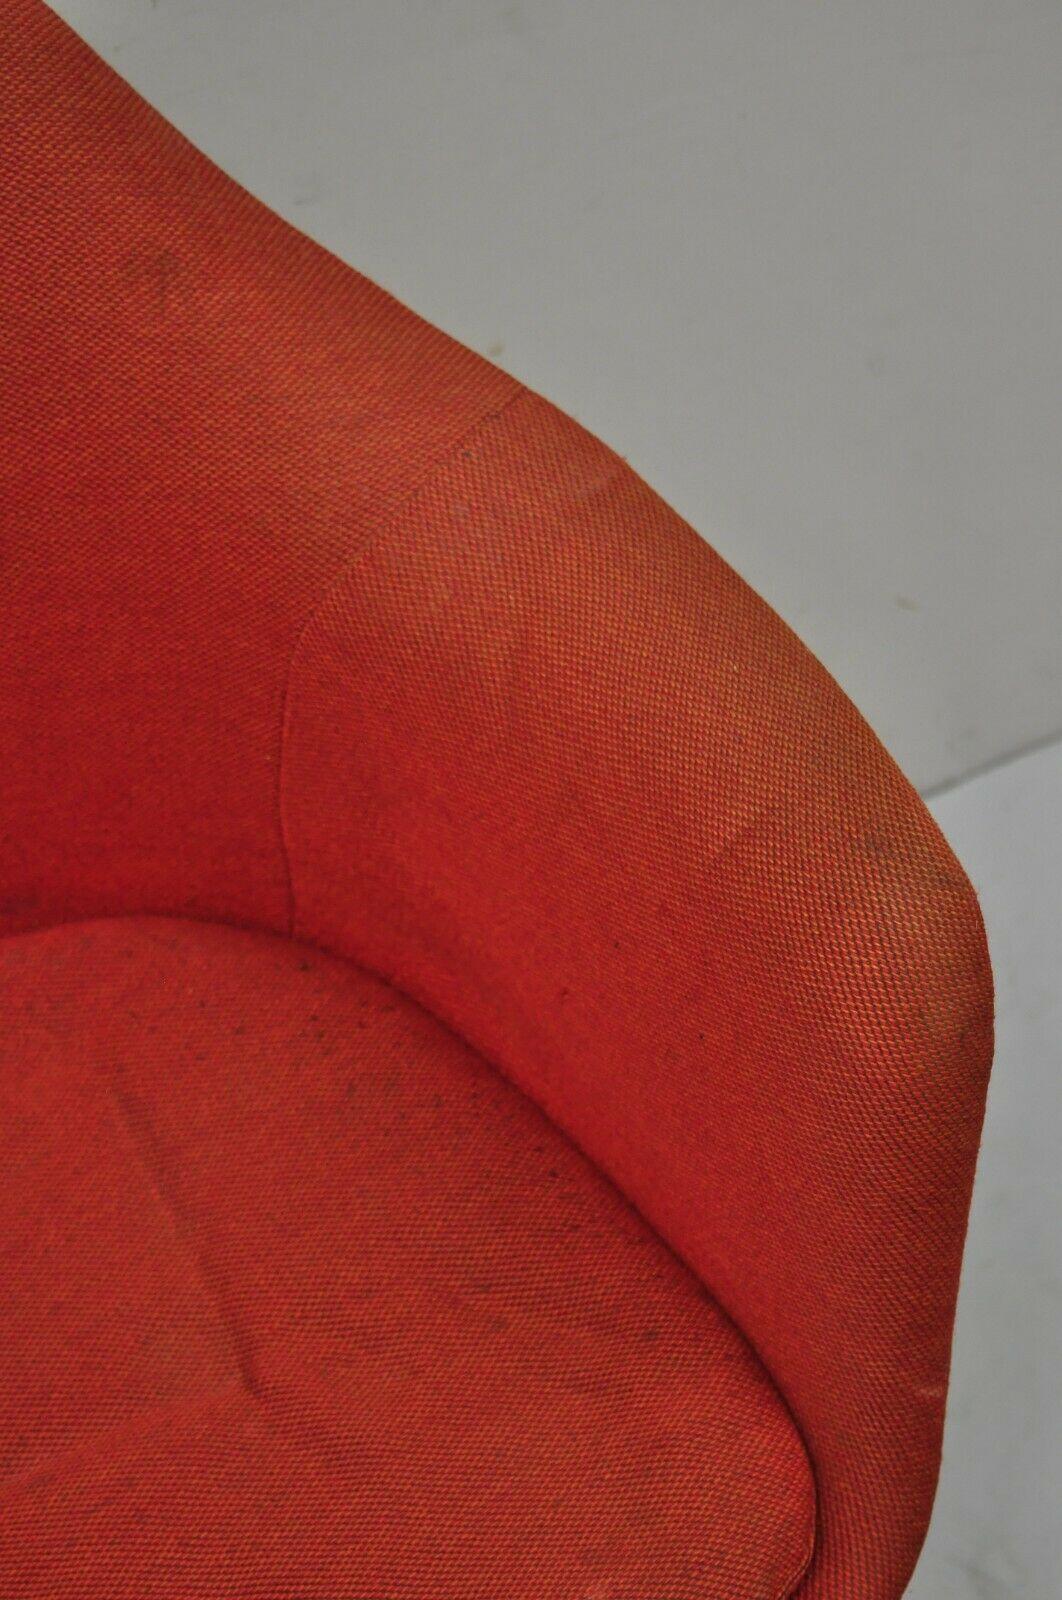 Vintage Knoll Eero Saarinen Red Upholstered Fiberglass Tulip Arm Chair For Sale 2